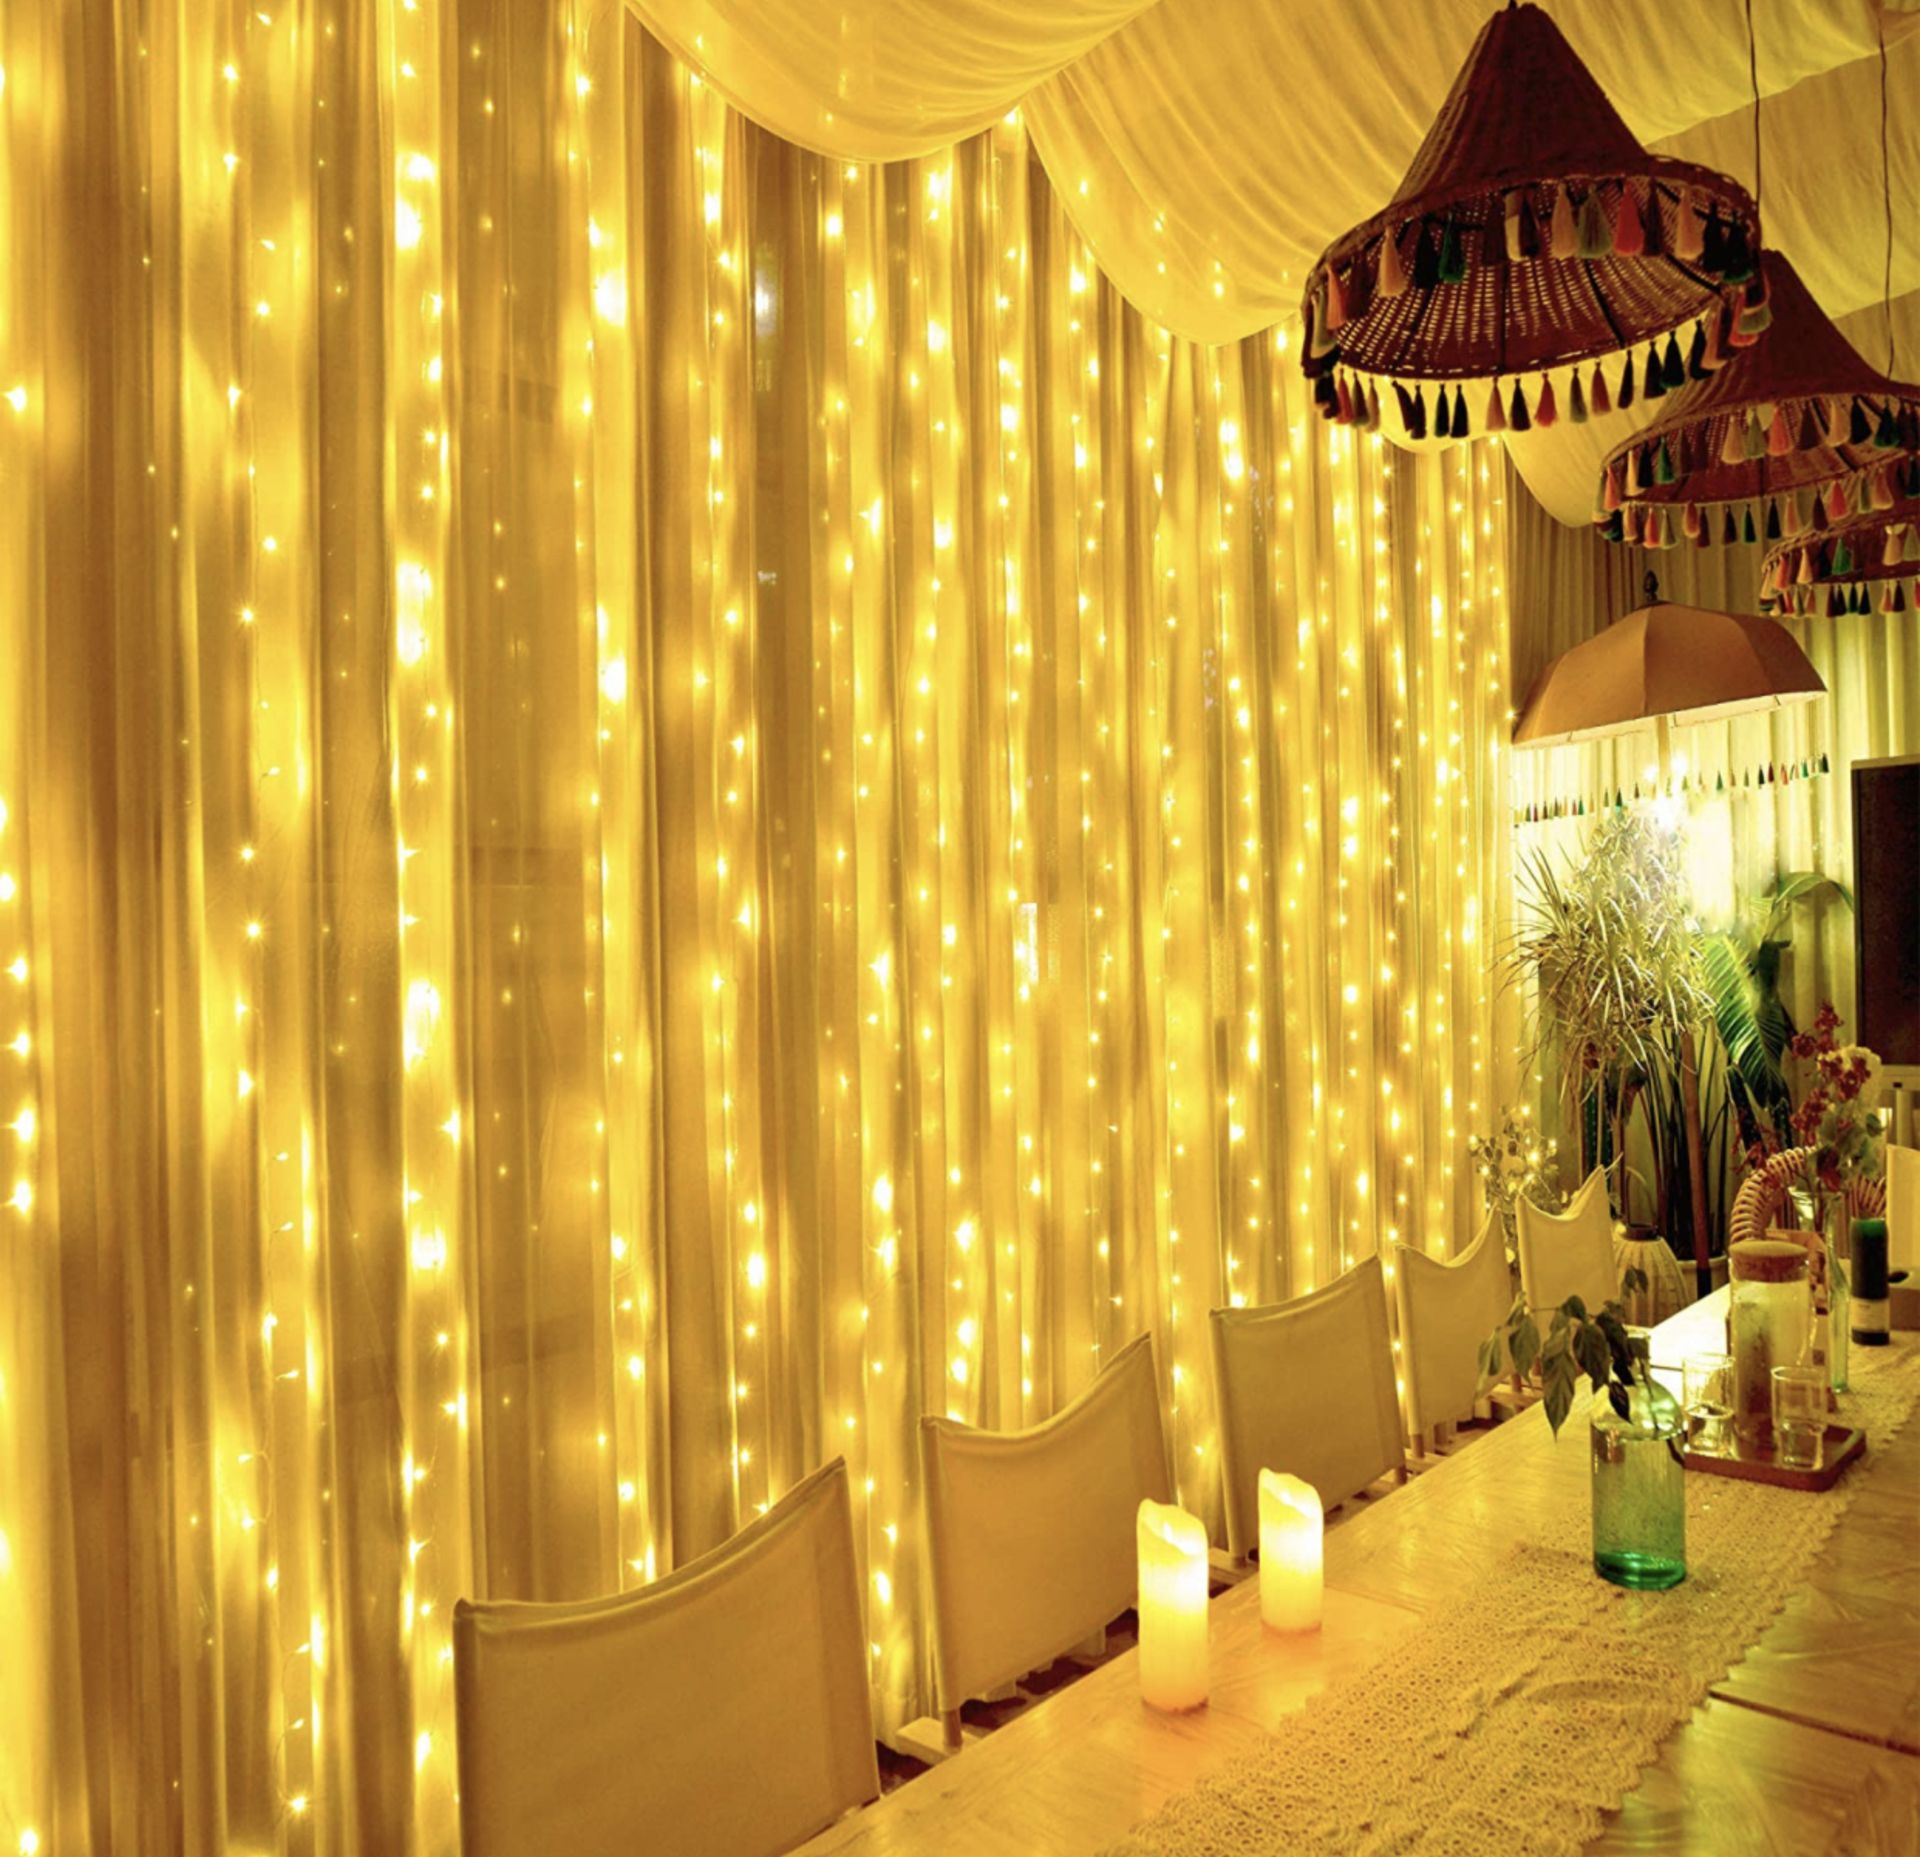 Hezbjiti 600 LED Curtain Lights 6m x 3m Curtain Fairy Lights